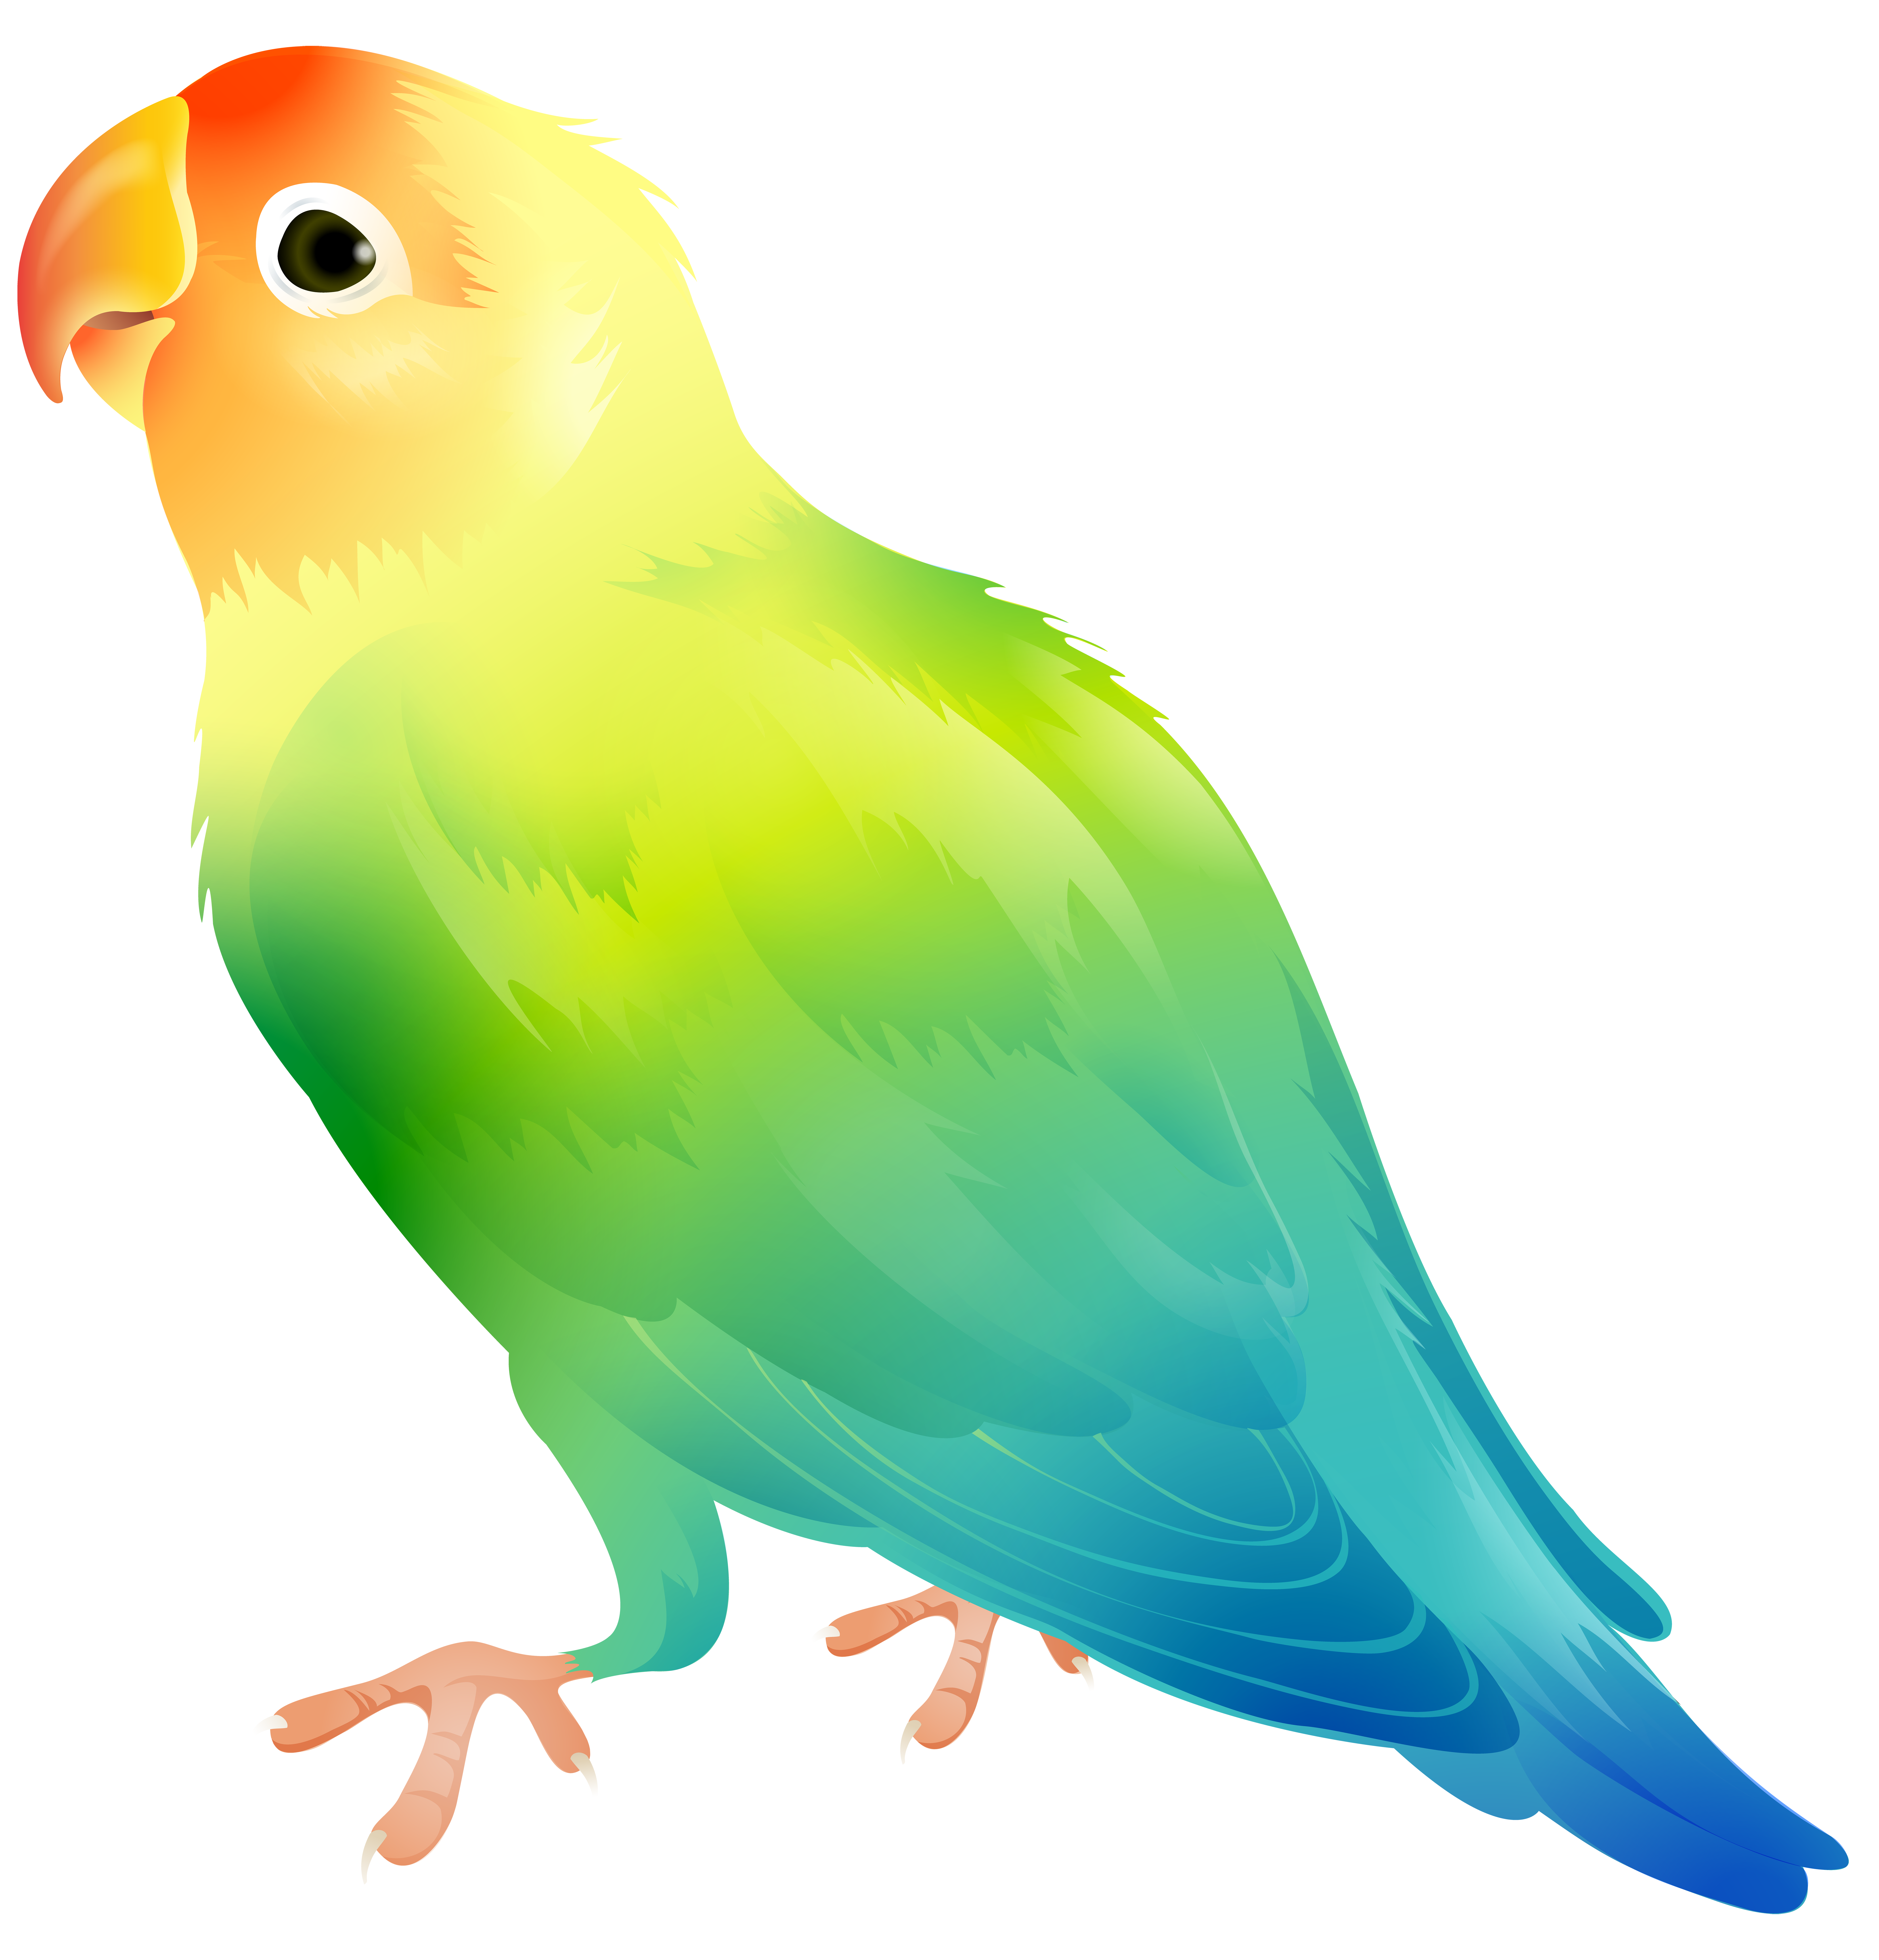 Parrot bird png.